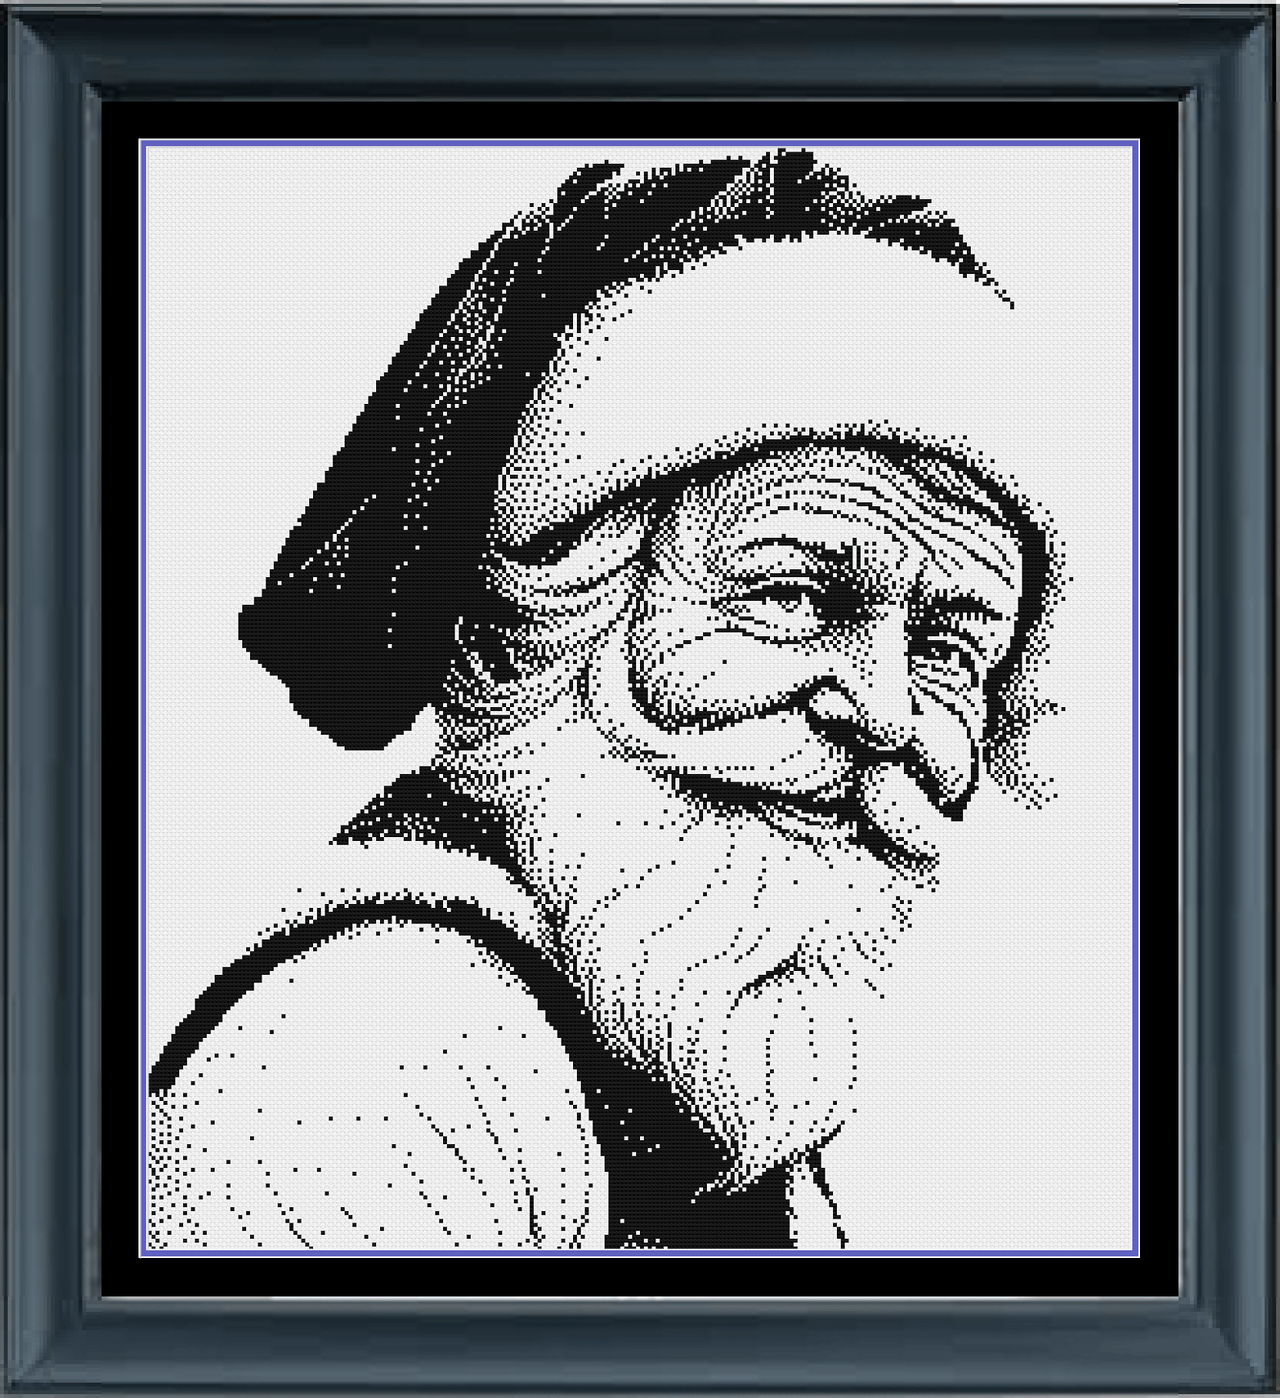 Stitching Jules Design Cross Stitch Pattern Santa Claus Monochrome Cross Stitch Pattern | Blackwork | Instant Download PDF